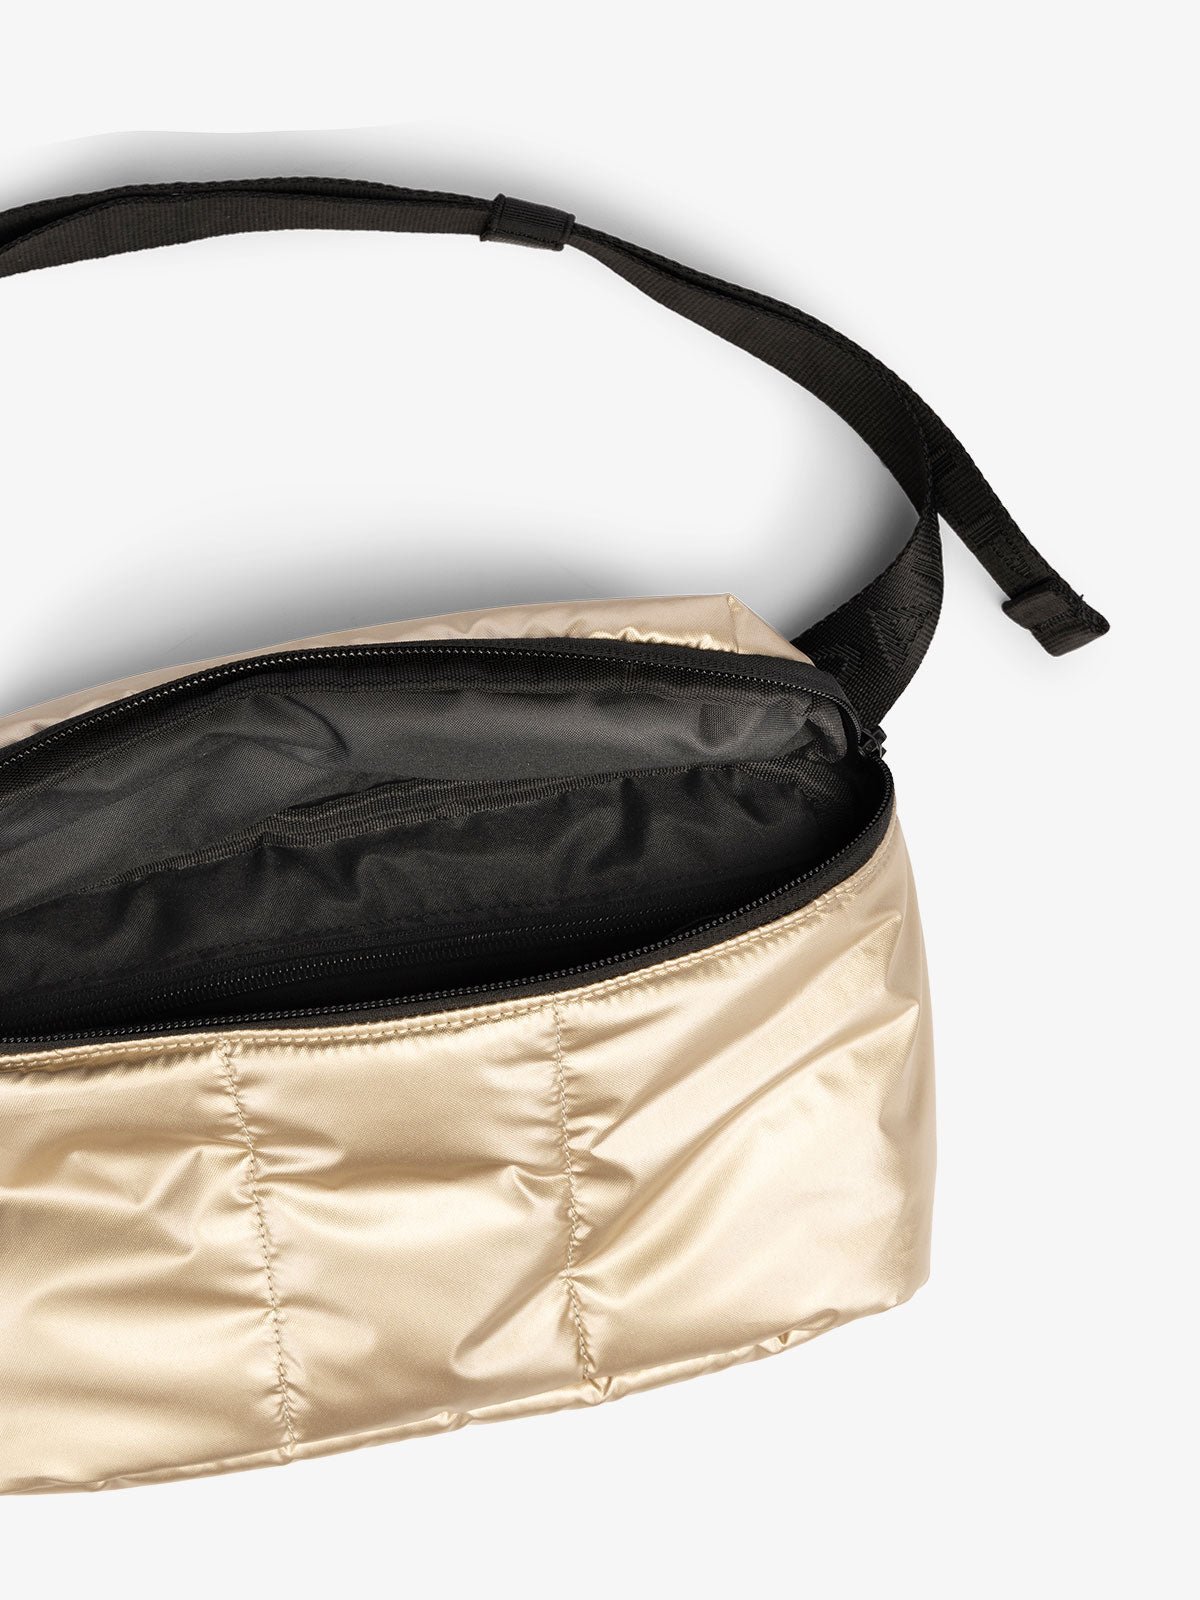 CALPAK Luka Belt Bag close up interior and strap in metallic gold